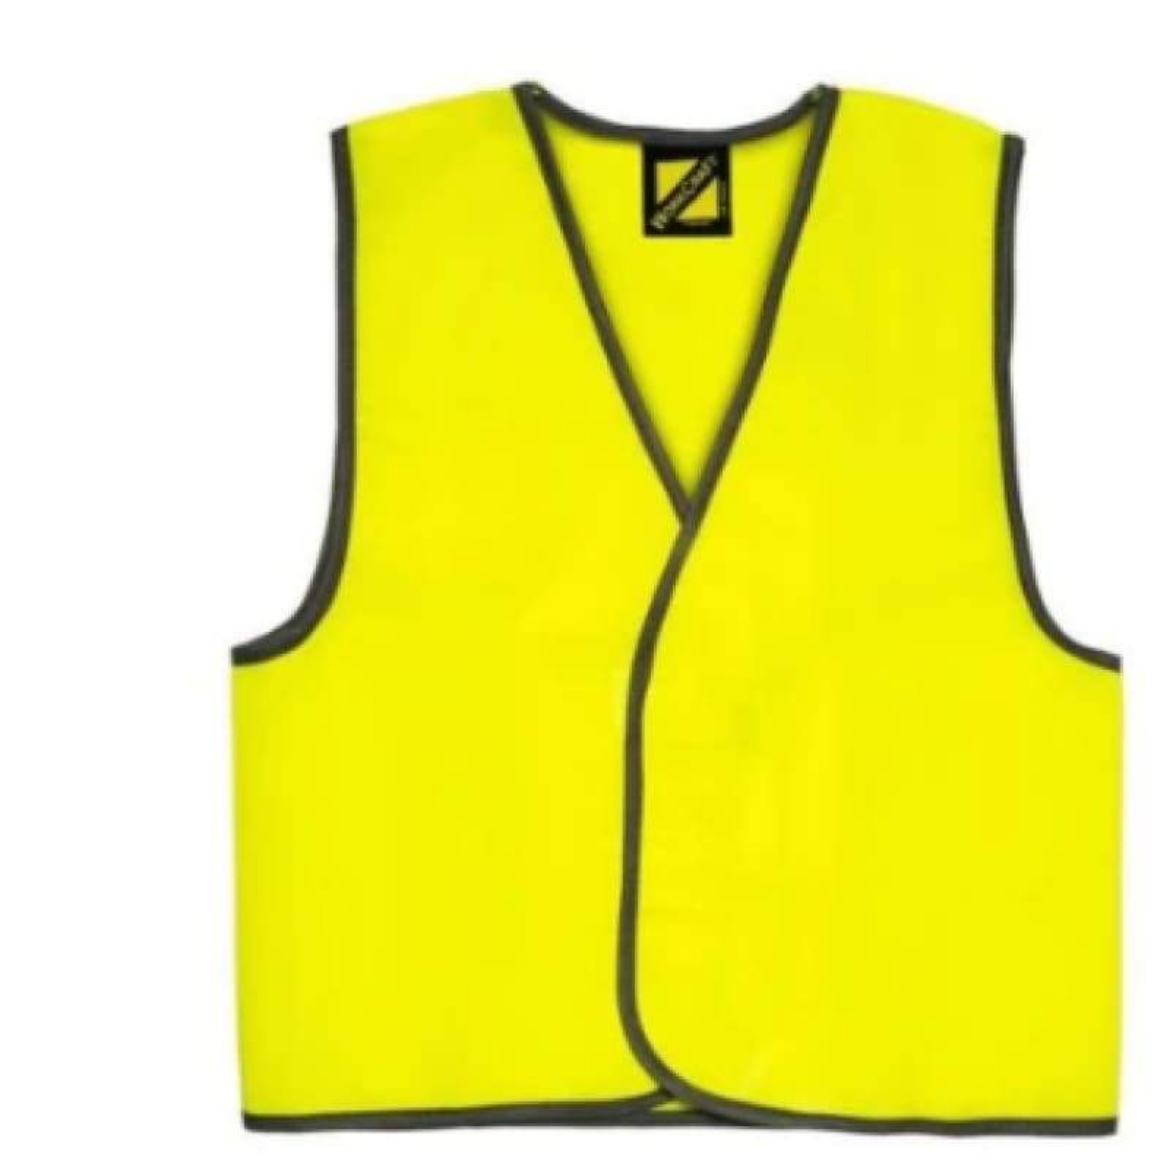 Picture of WorkCraft, Childrens, Safety Vest